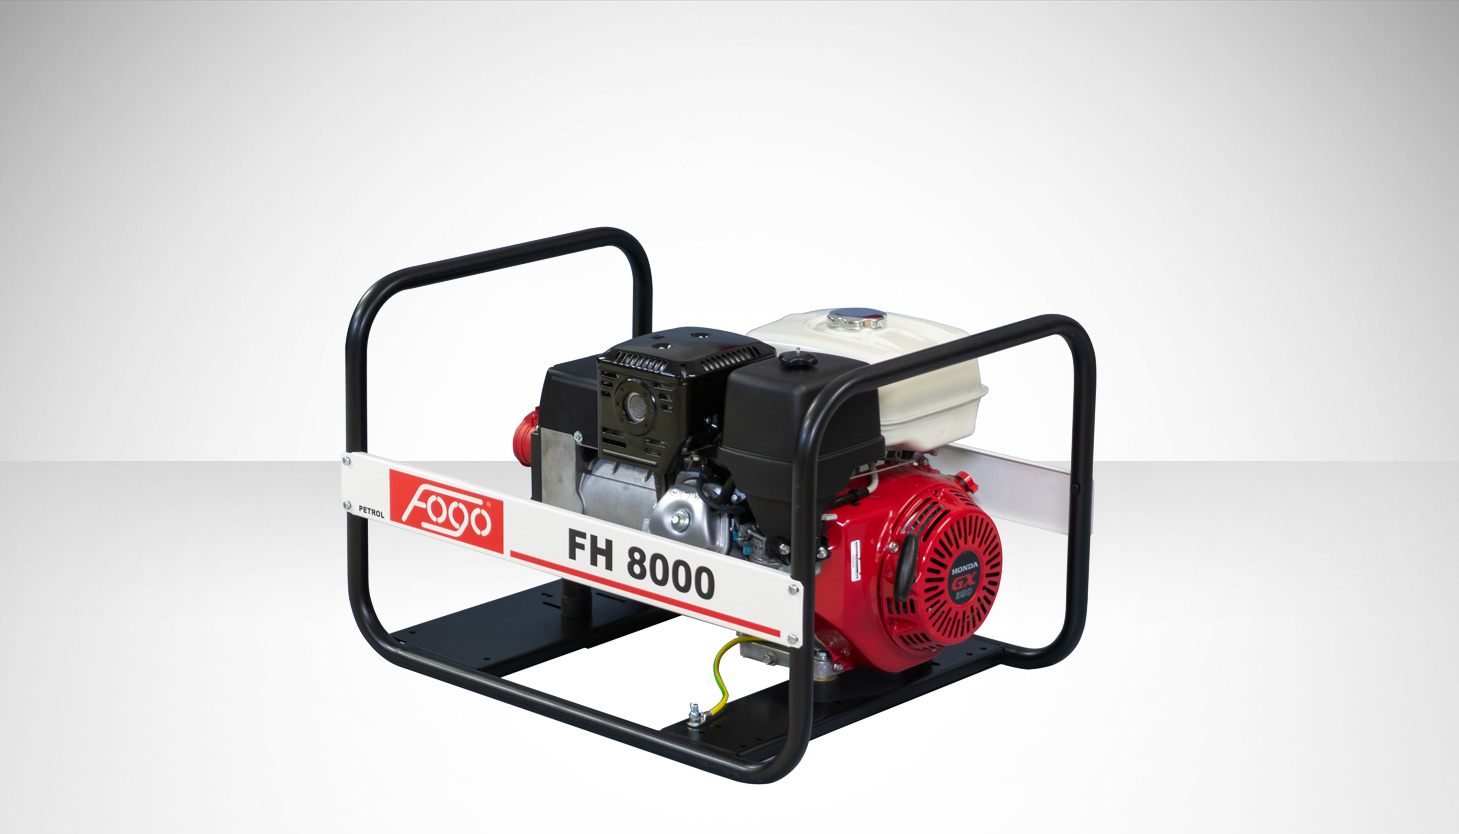 FOGO FH 8000 Agregat prądotwórczy trójfazowy nr katalogowy 28161